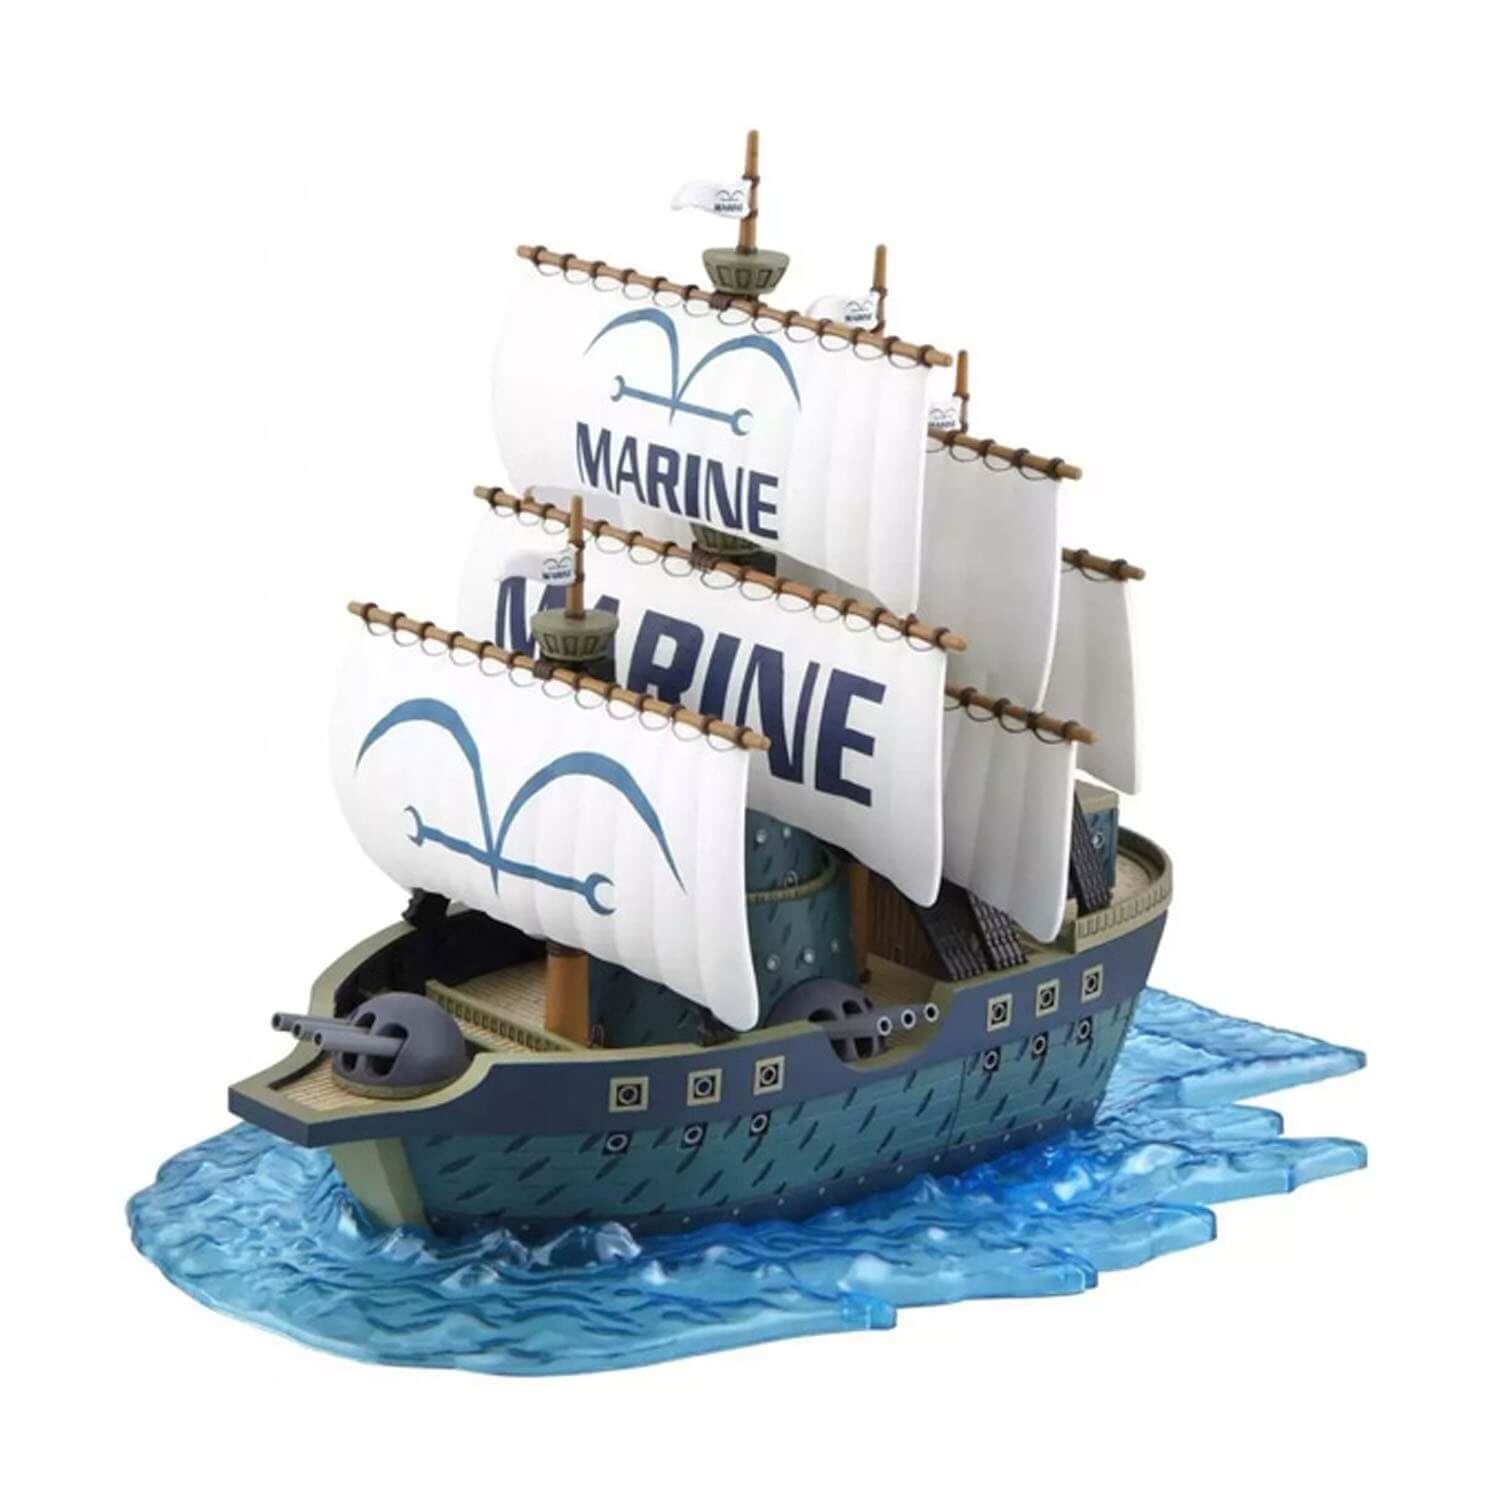 Maquette One Piece - Marine Ship Grand Ship Collection 15cm - Banda